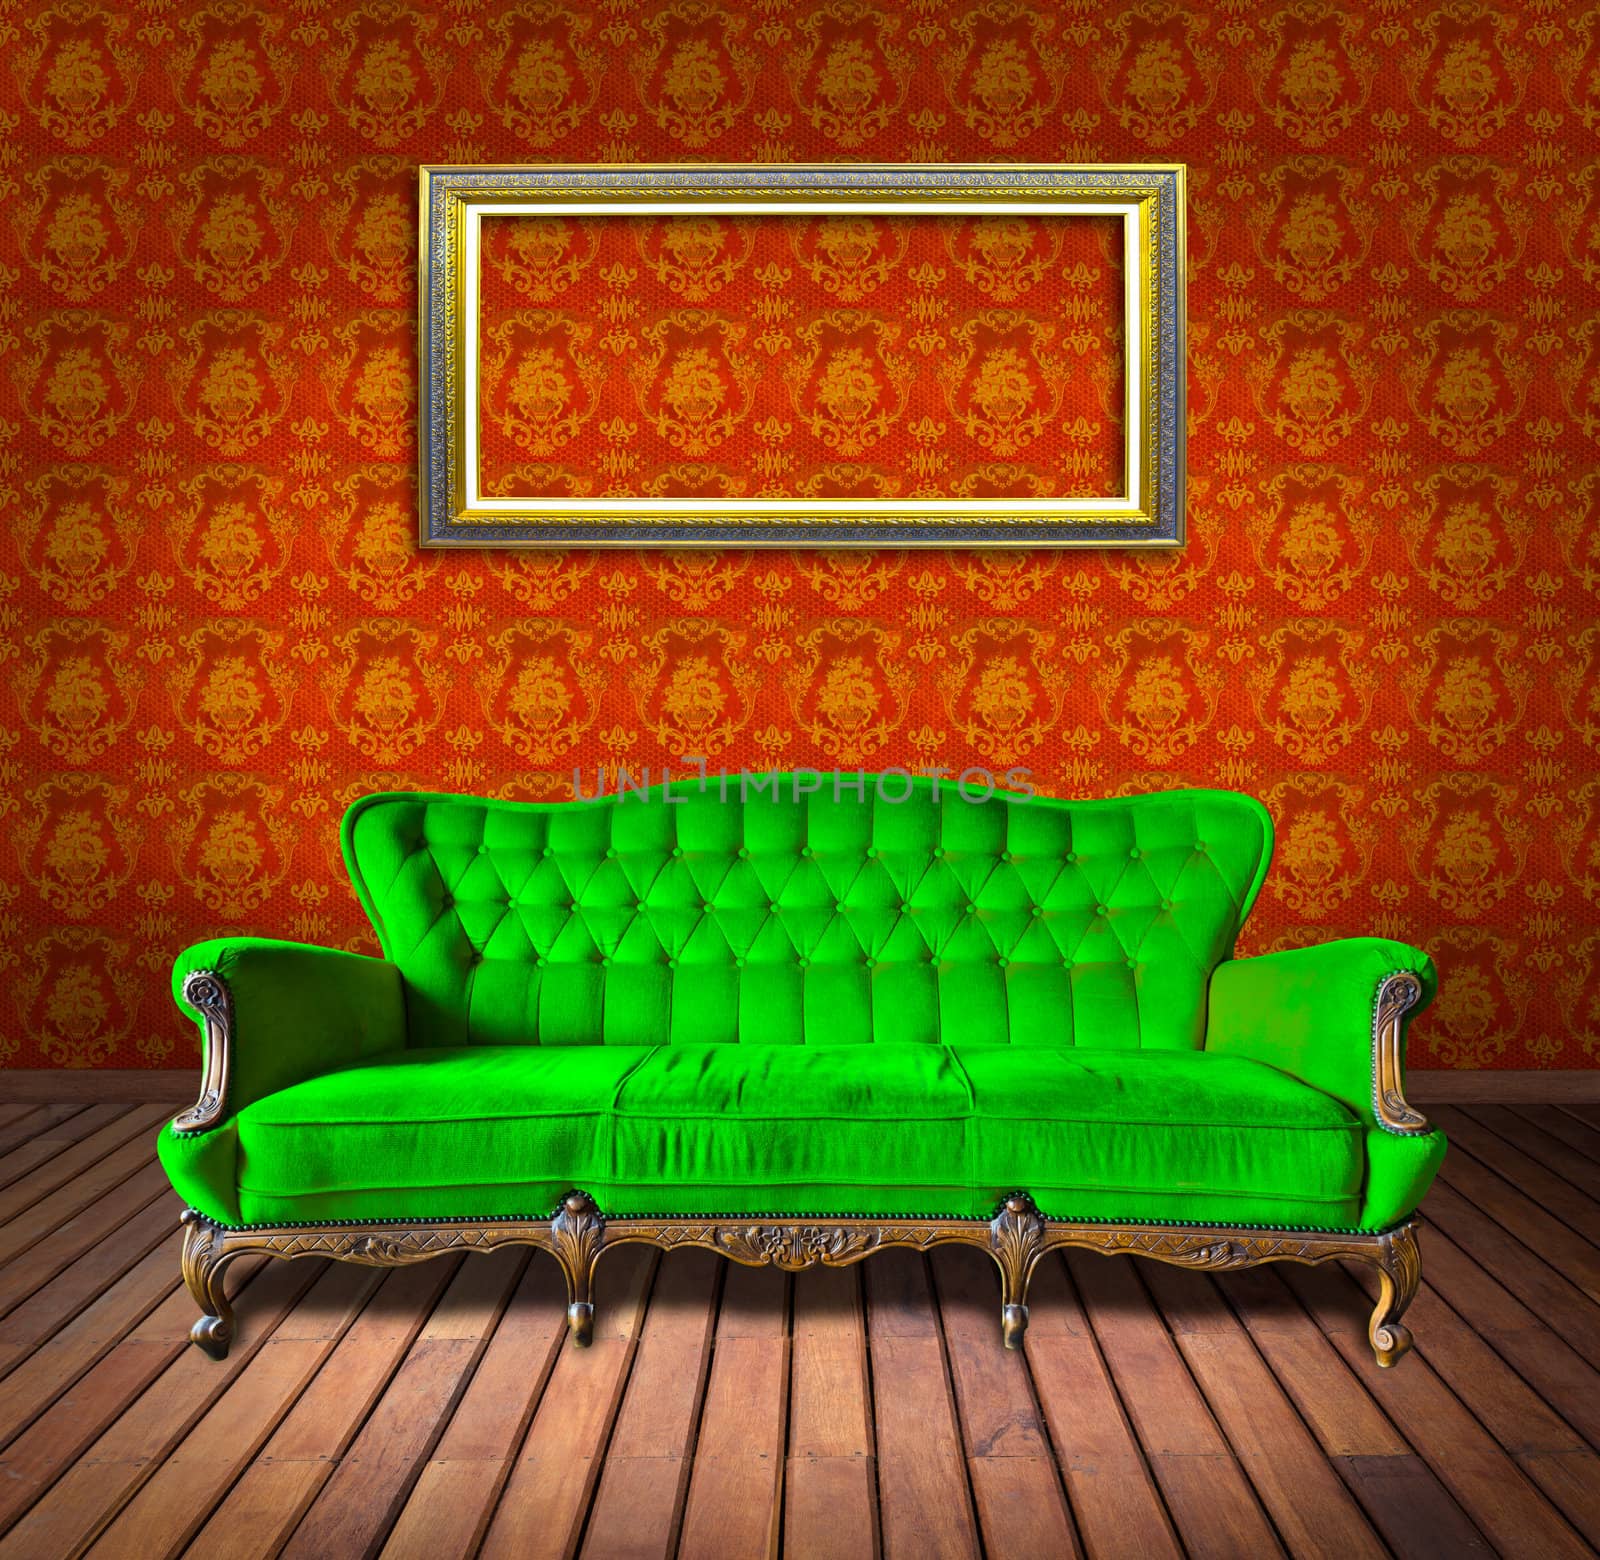 vintage luxury armchair and frame in orange wallpaper room